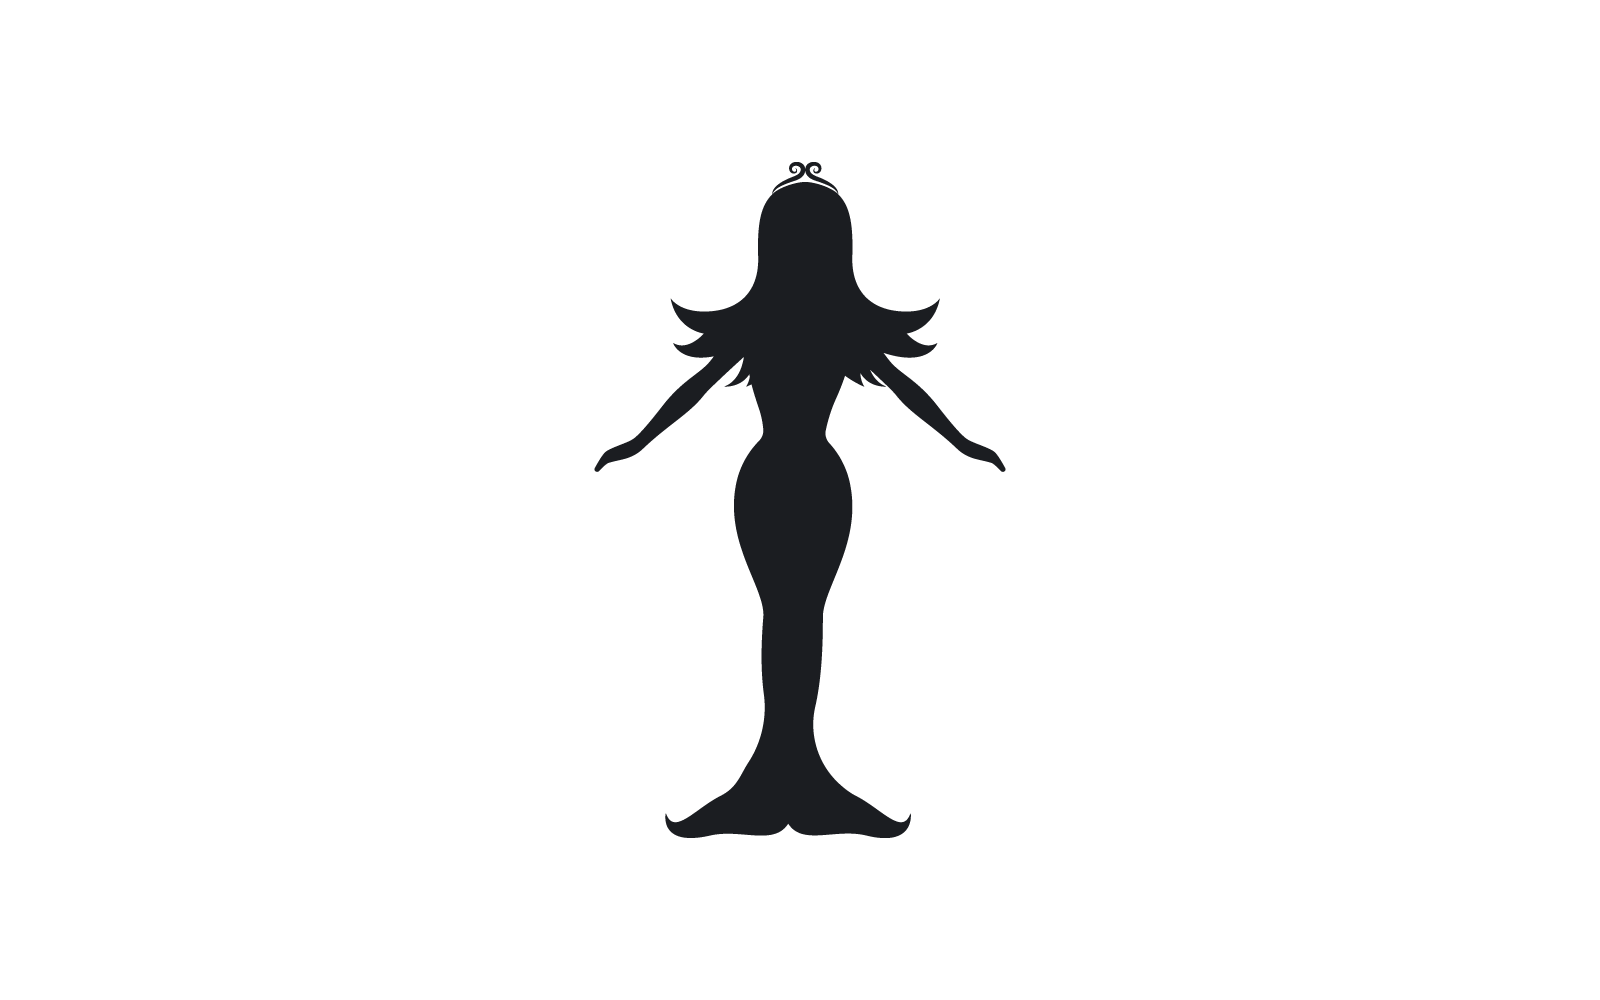 Mermaid illustration logo vector design template